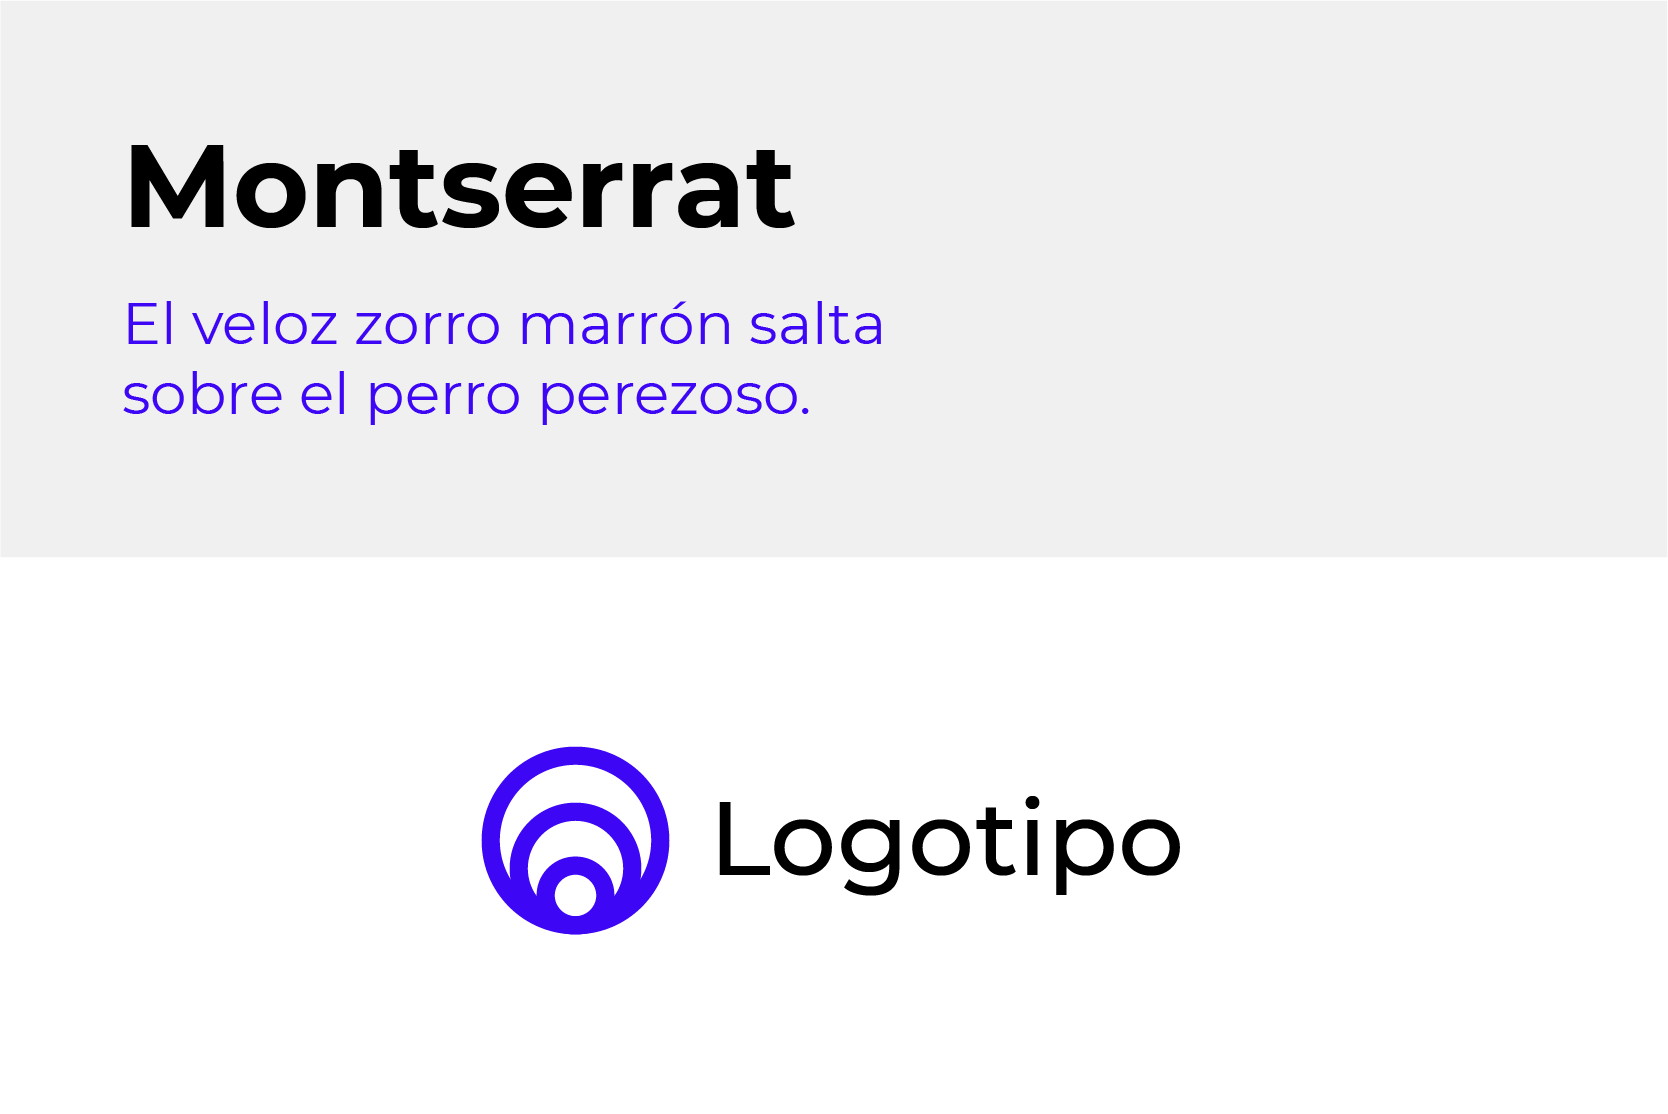 Mejores tipografías para logos Tipografía Montserrat para logos Google Fonts